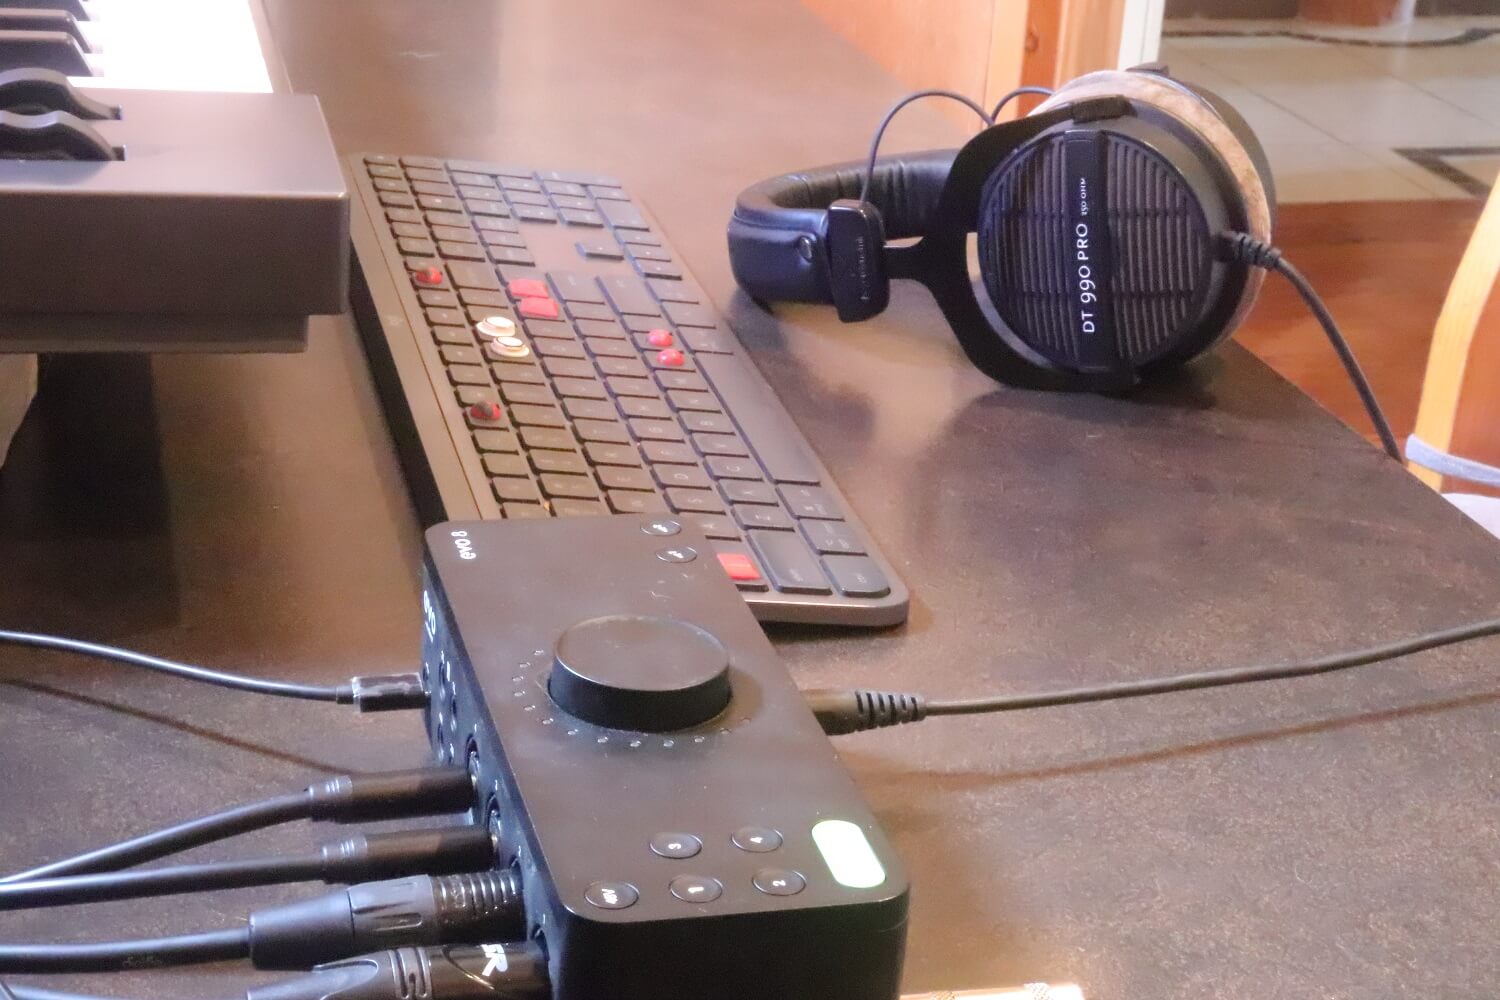 Jenny's workstation desktop featuring headphones, keyboard, midi keyboard and EVO 8 audio interface